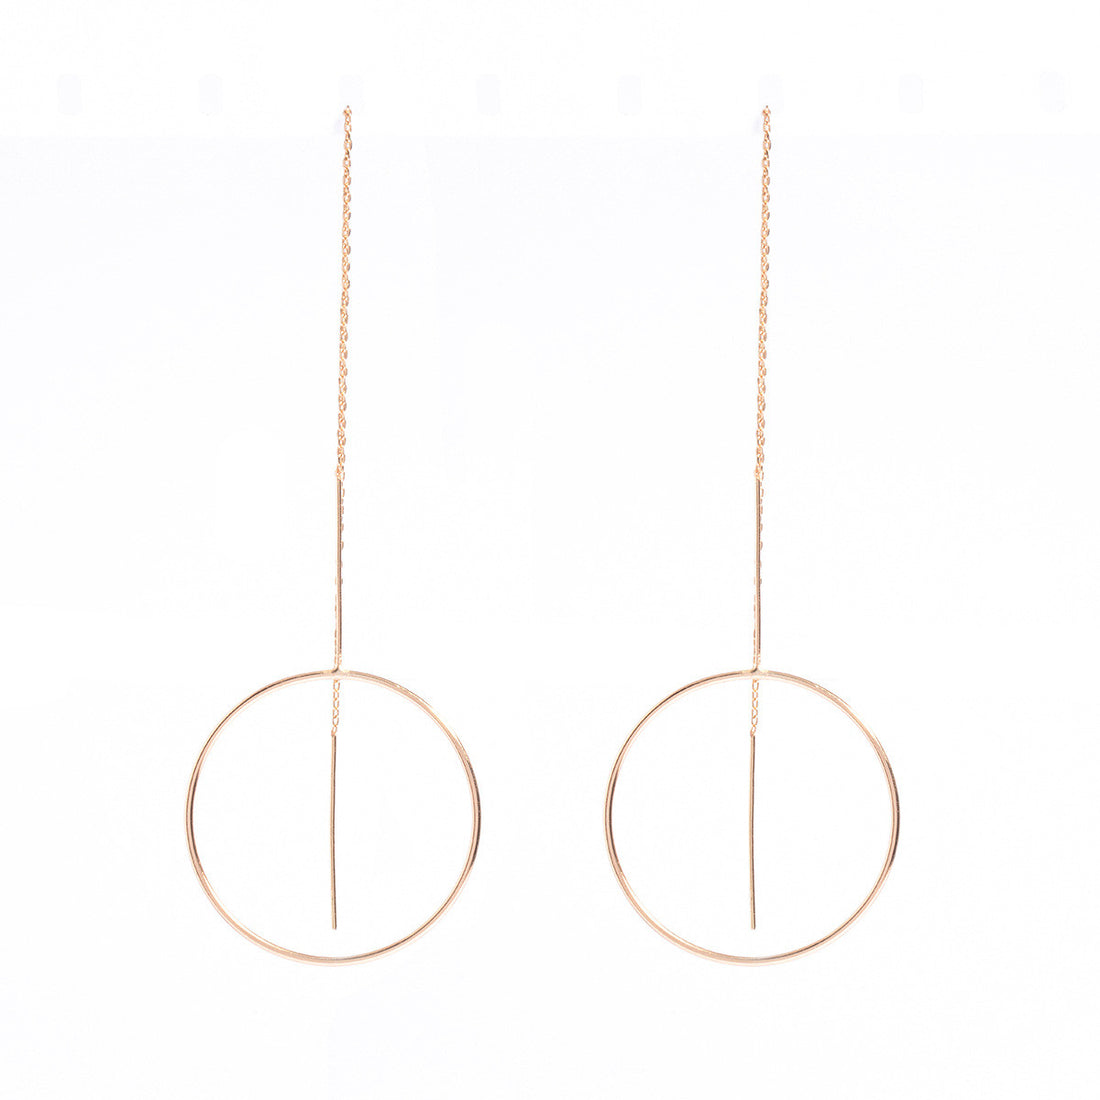 Strip Loops Tassels Earrings - Oh Yours Fashion - 1